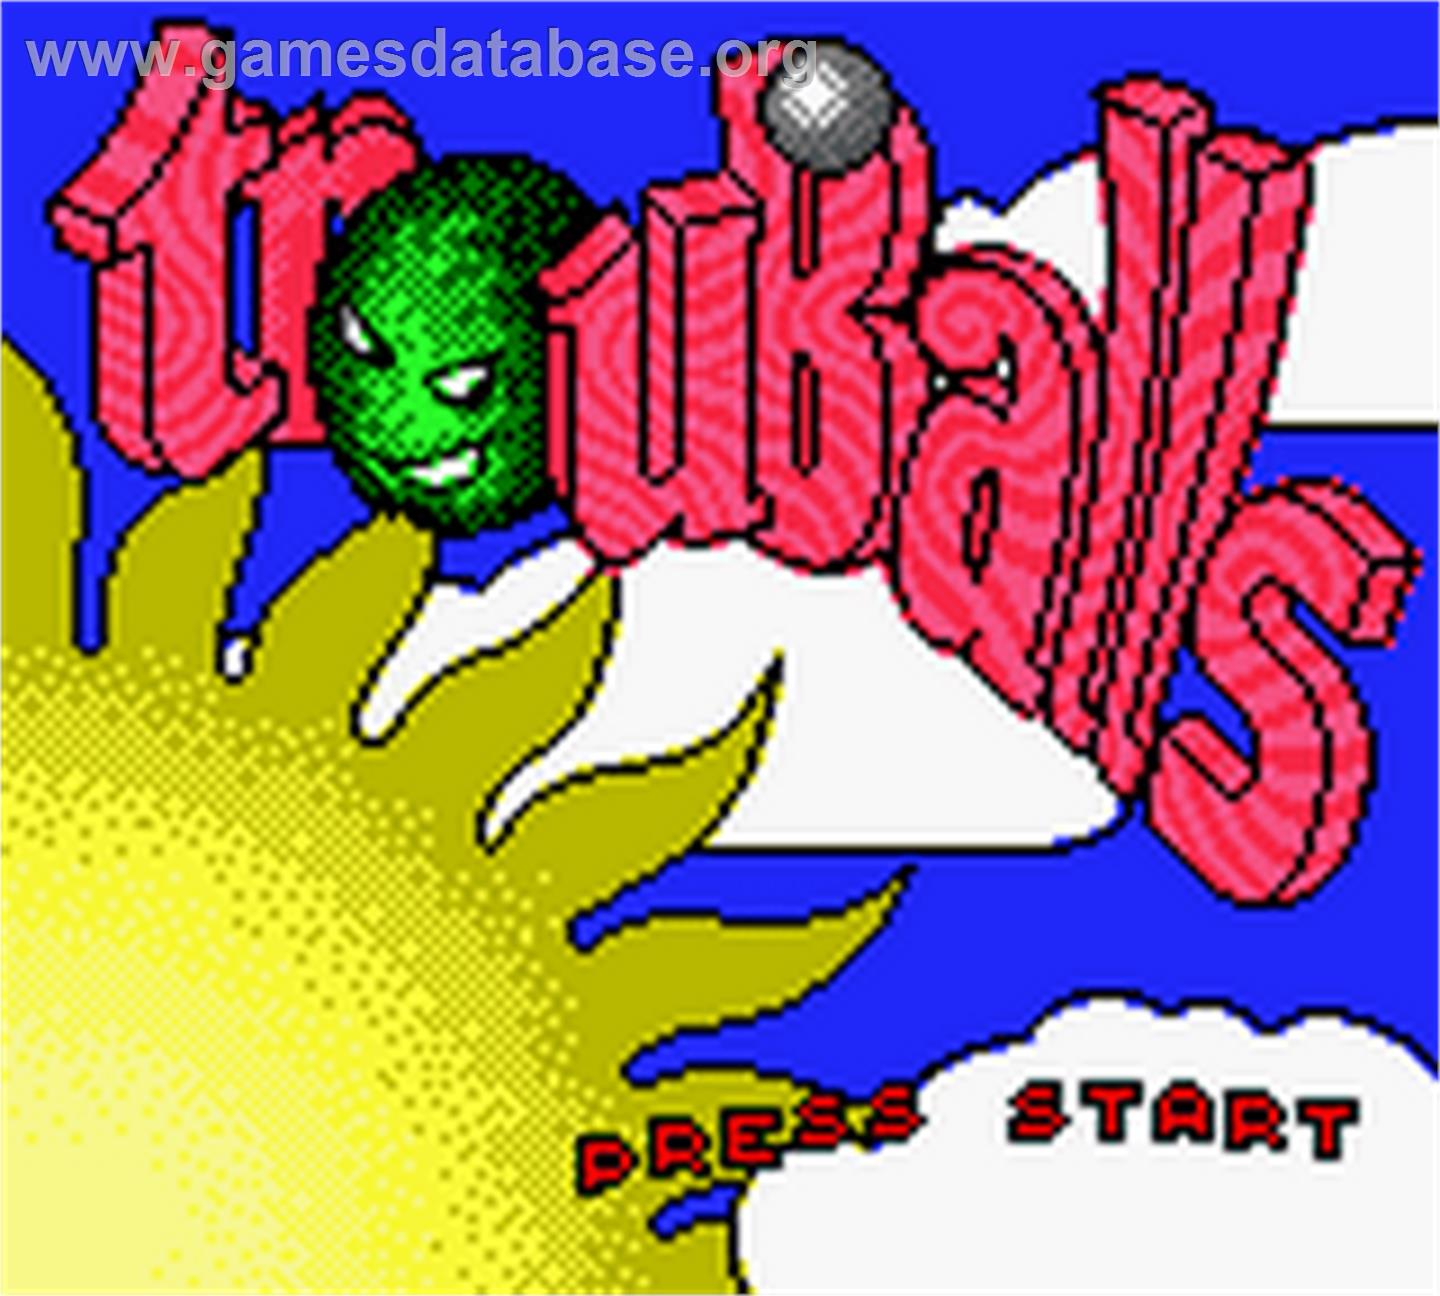 Trouballs - Nintendo Game Boy Color - Artwork - Title Screen